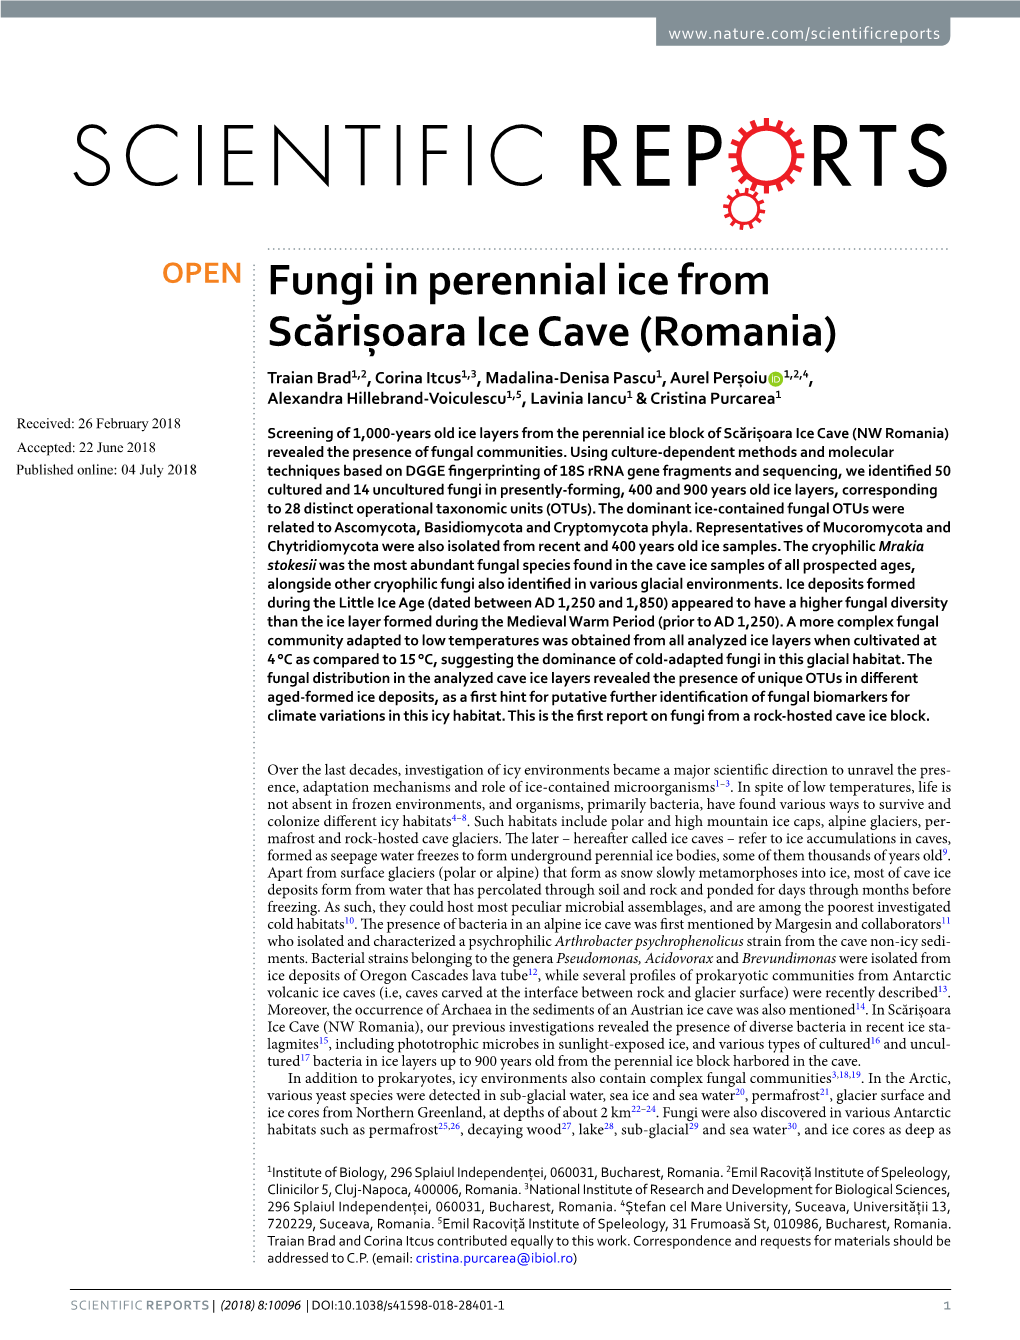 Fungi in Perennial Ice from Scărișoara Ice Cave